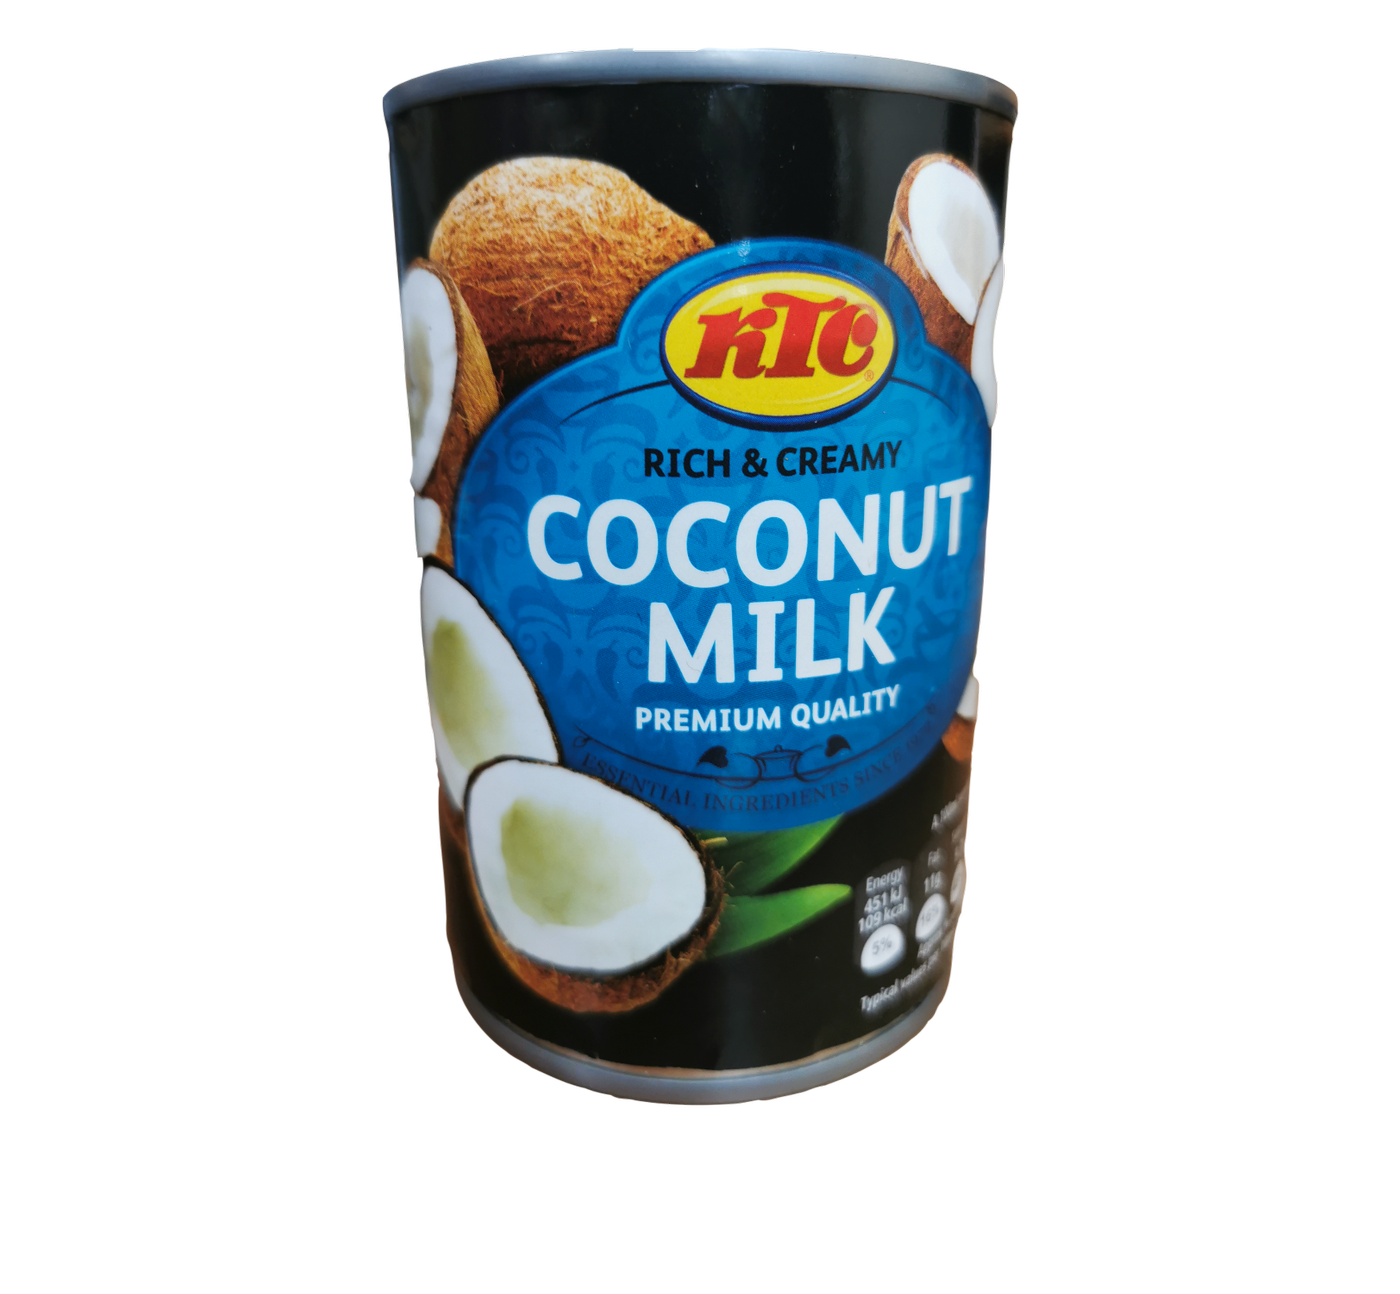 KTC Coconut Milk